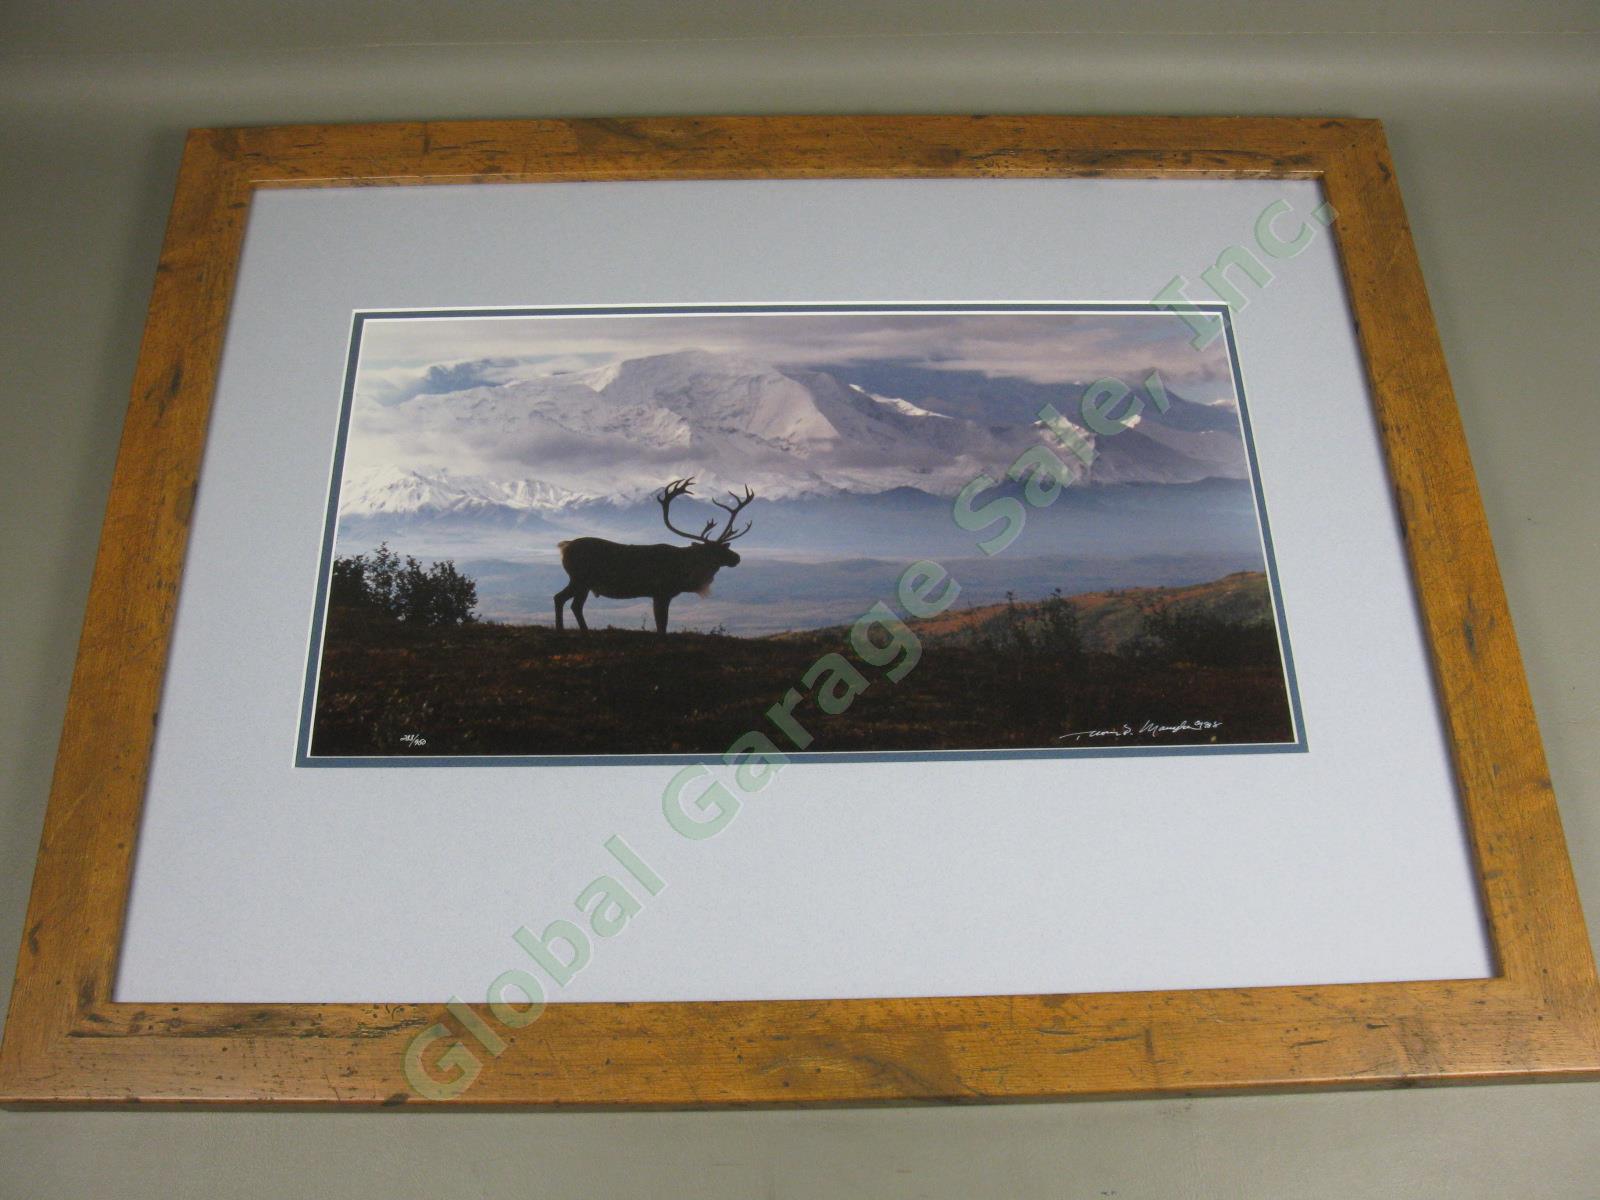 Rare 1988 Thomas Mangelsen Signed Photograph Caribou Country Mt McKinley Alaska